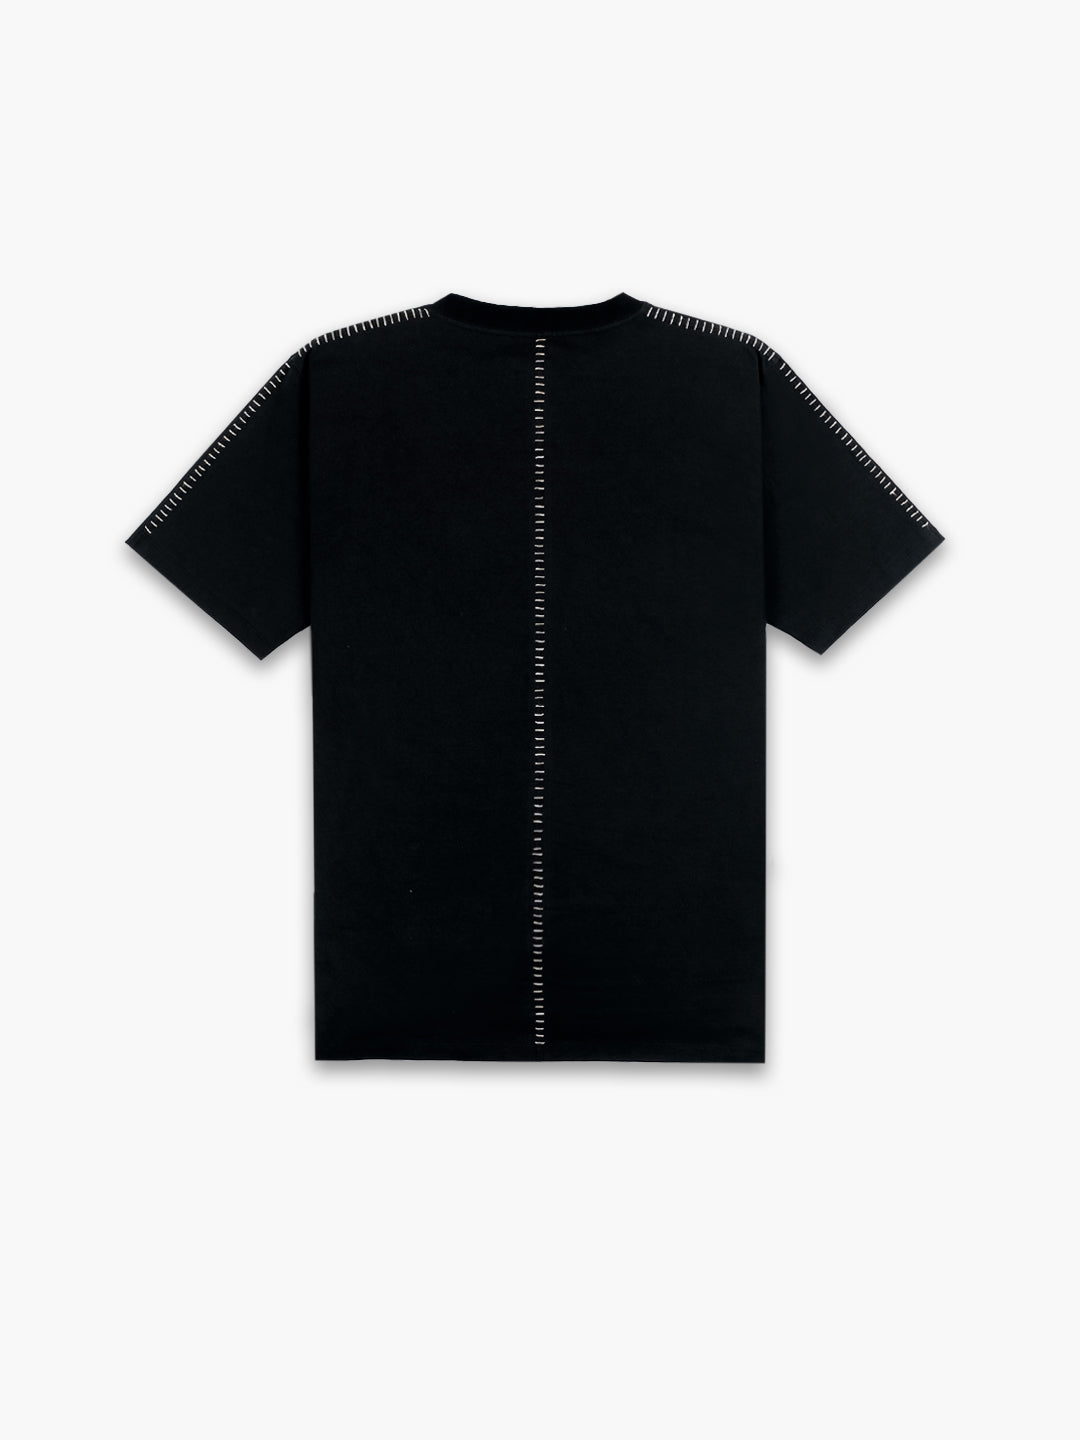 Radical Plastic 2 T-shirt Black